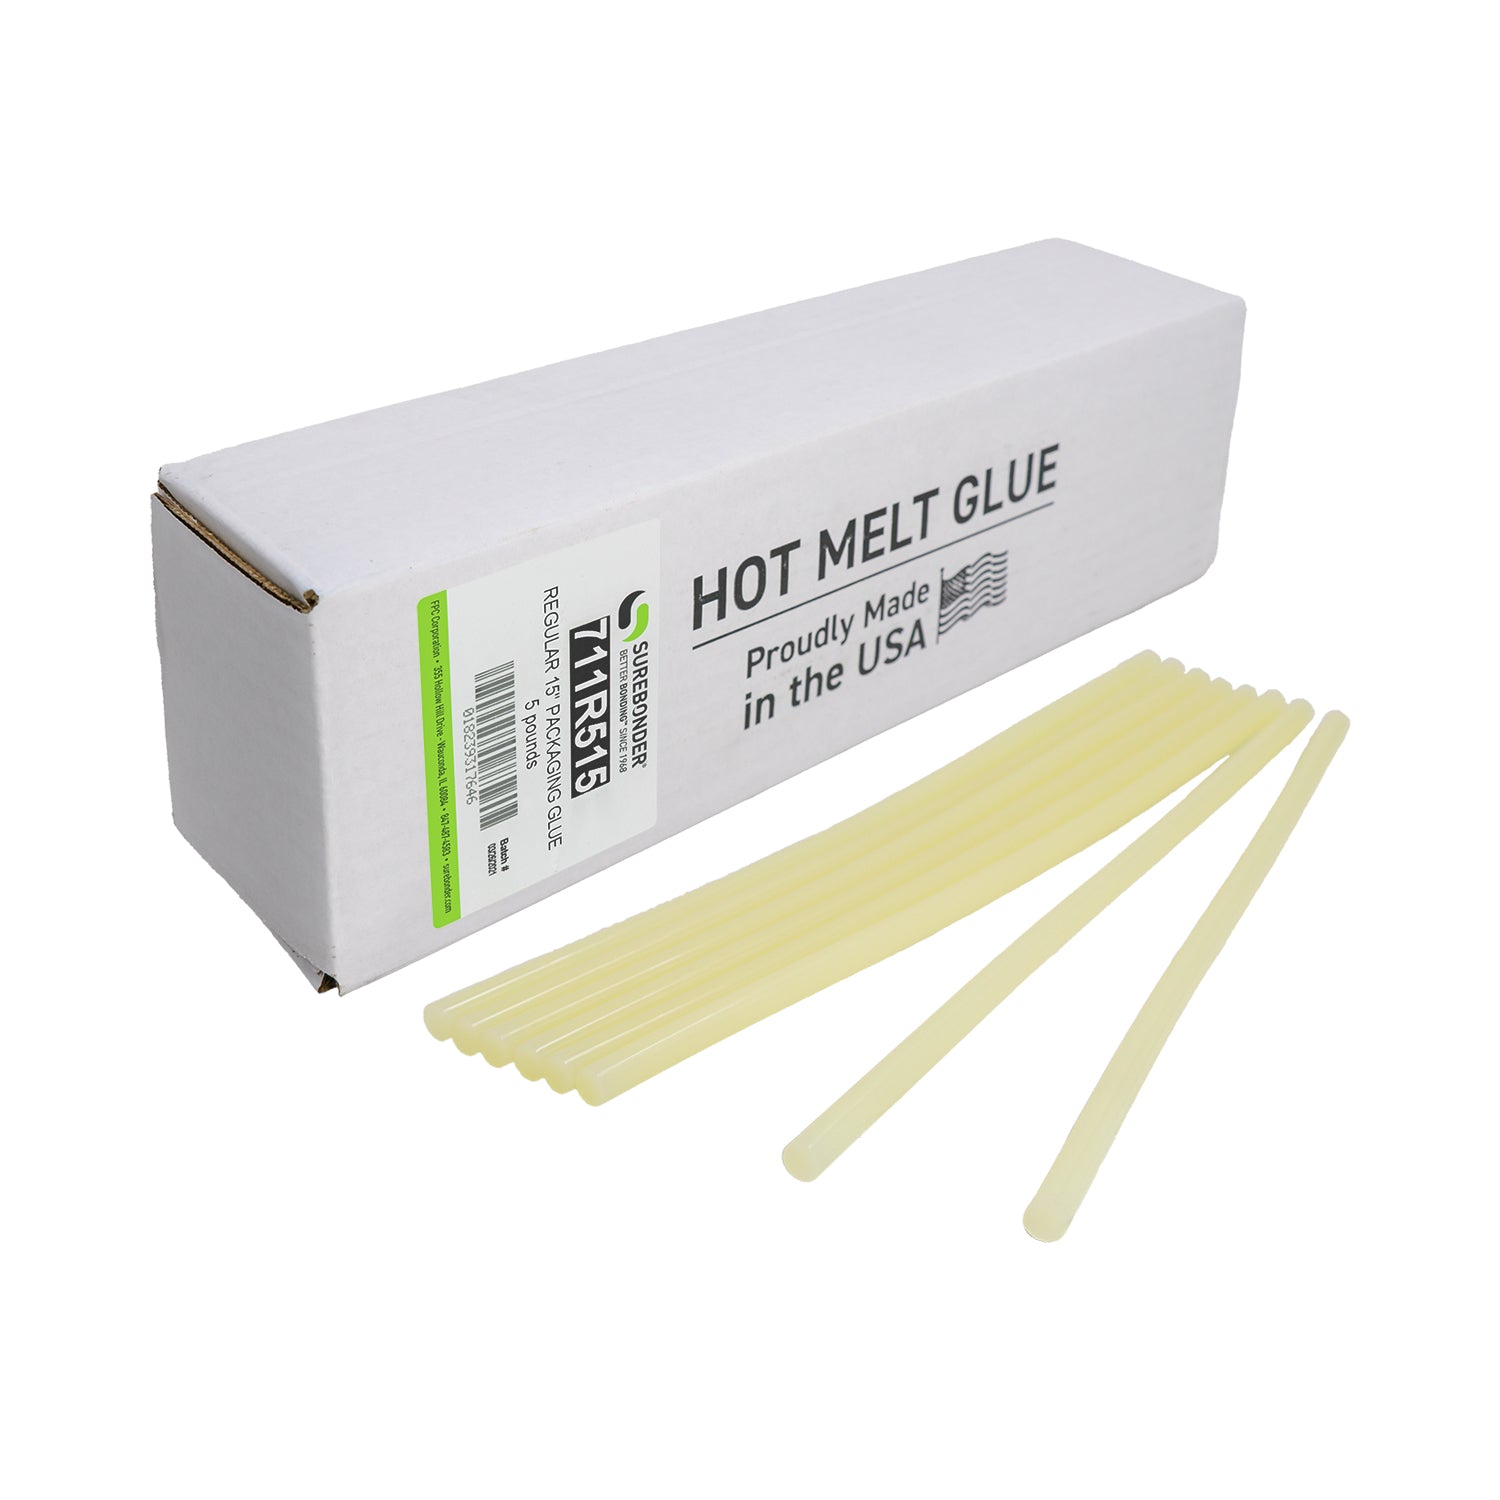 Surebonder 725R15 Full Size 15 Clear Hot Glue Stick - 25 lb Box